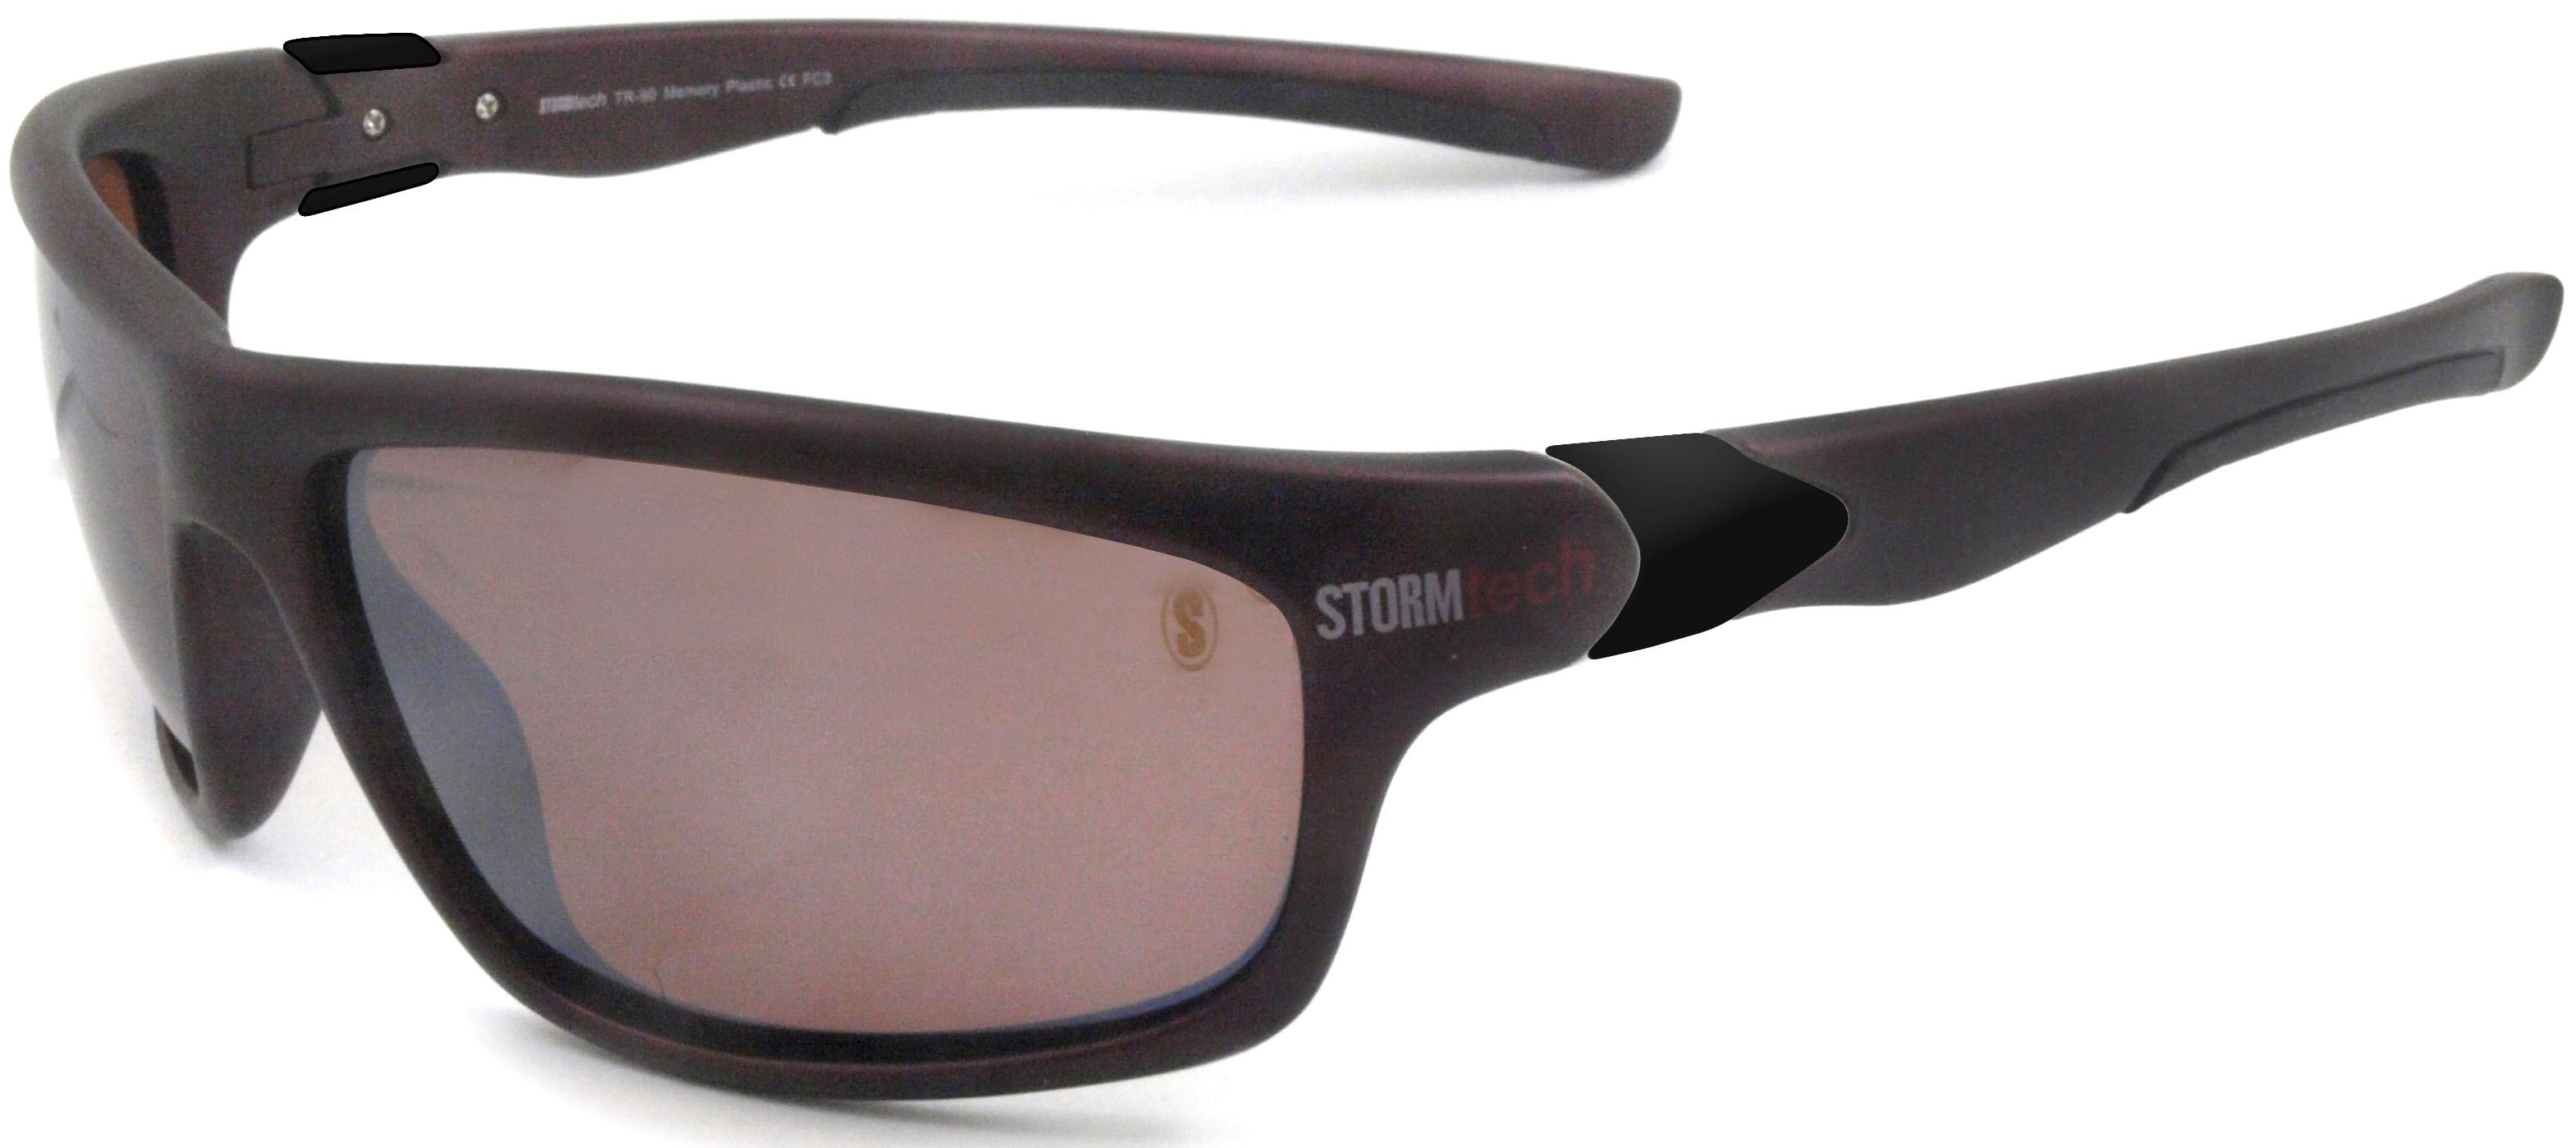 Stormtech Crete Sunglasses - Chocolate